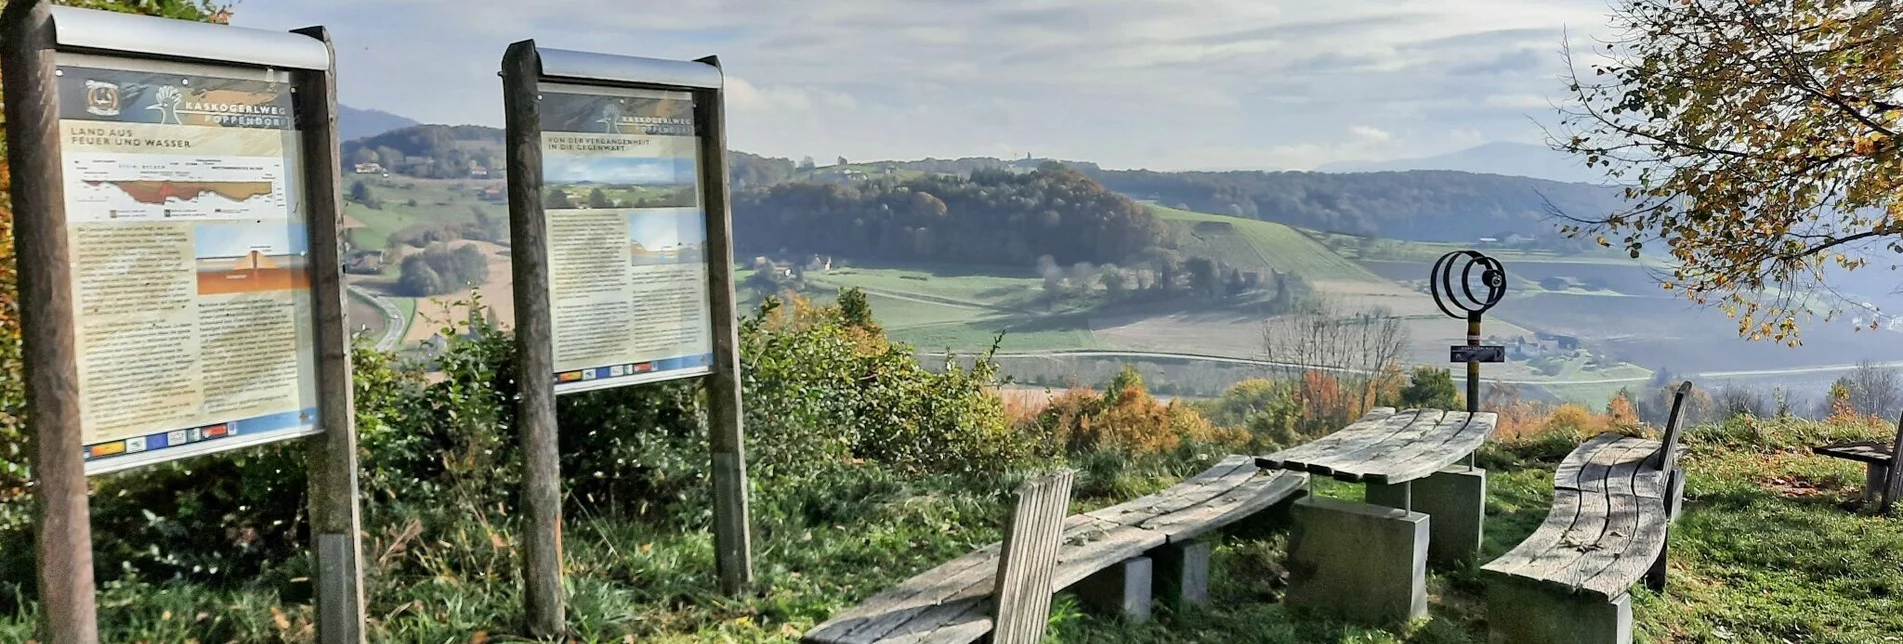 Nature Trail Kaskögerl track (Kaskögerlweg) - Poppendorf/Gnas - Touren-Impression #1 | © Weges OG